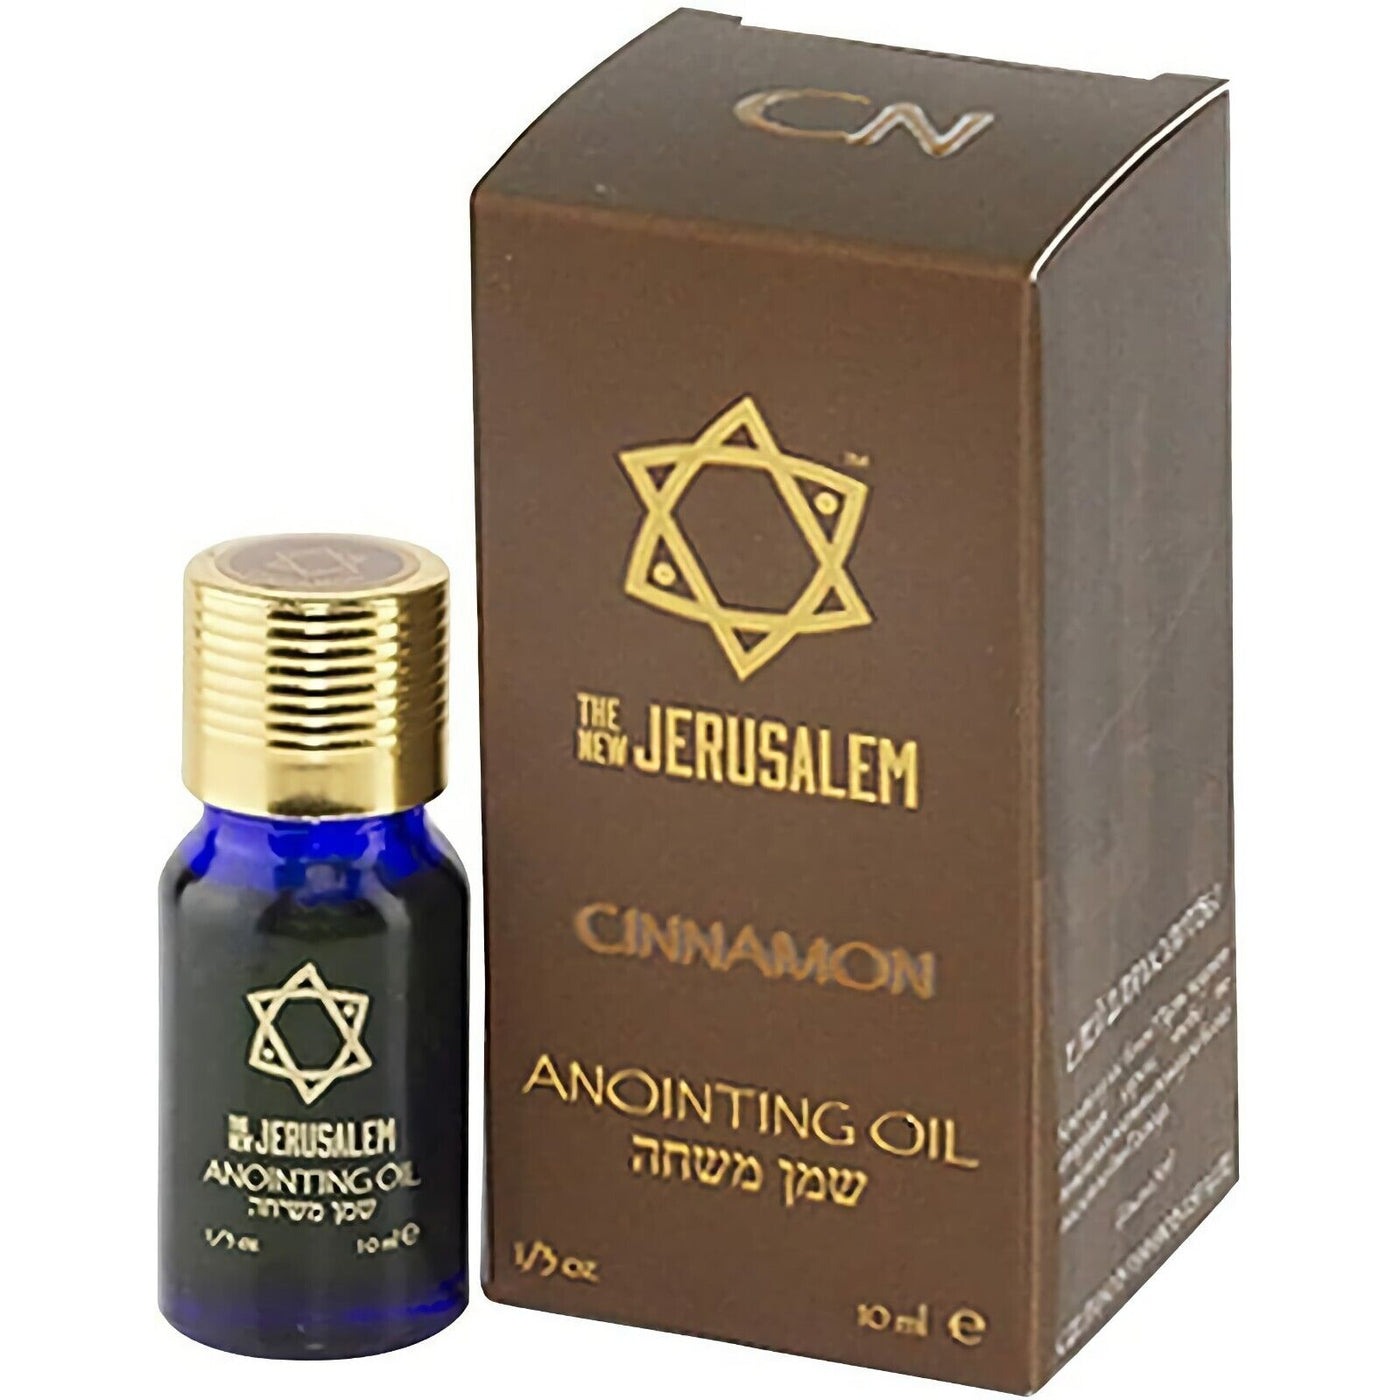 Anointing Oil Cinnamon Fragrance 10 ml - 0.34 fl.oz. From the new Jerusalem